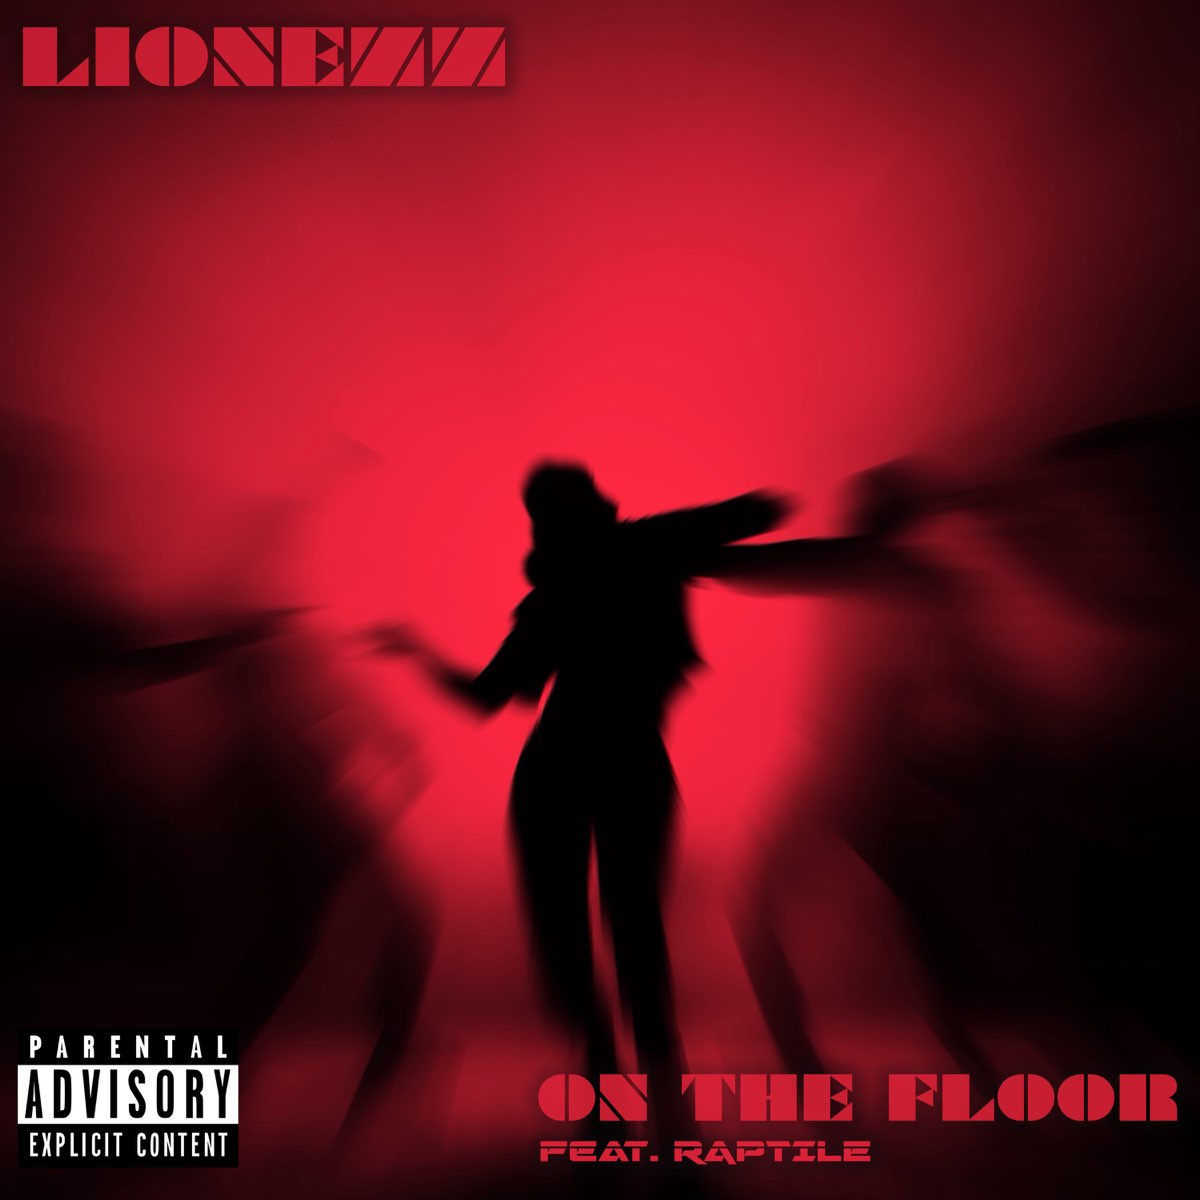 4 to the floor feat. Album Art зарубежка on the Floor. On the Floor слушать. Get up on the Floor песня. Love on the Floor.